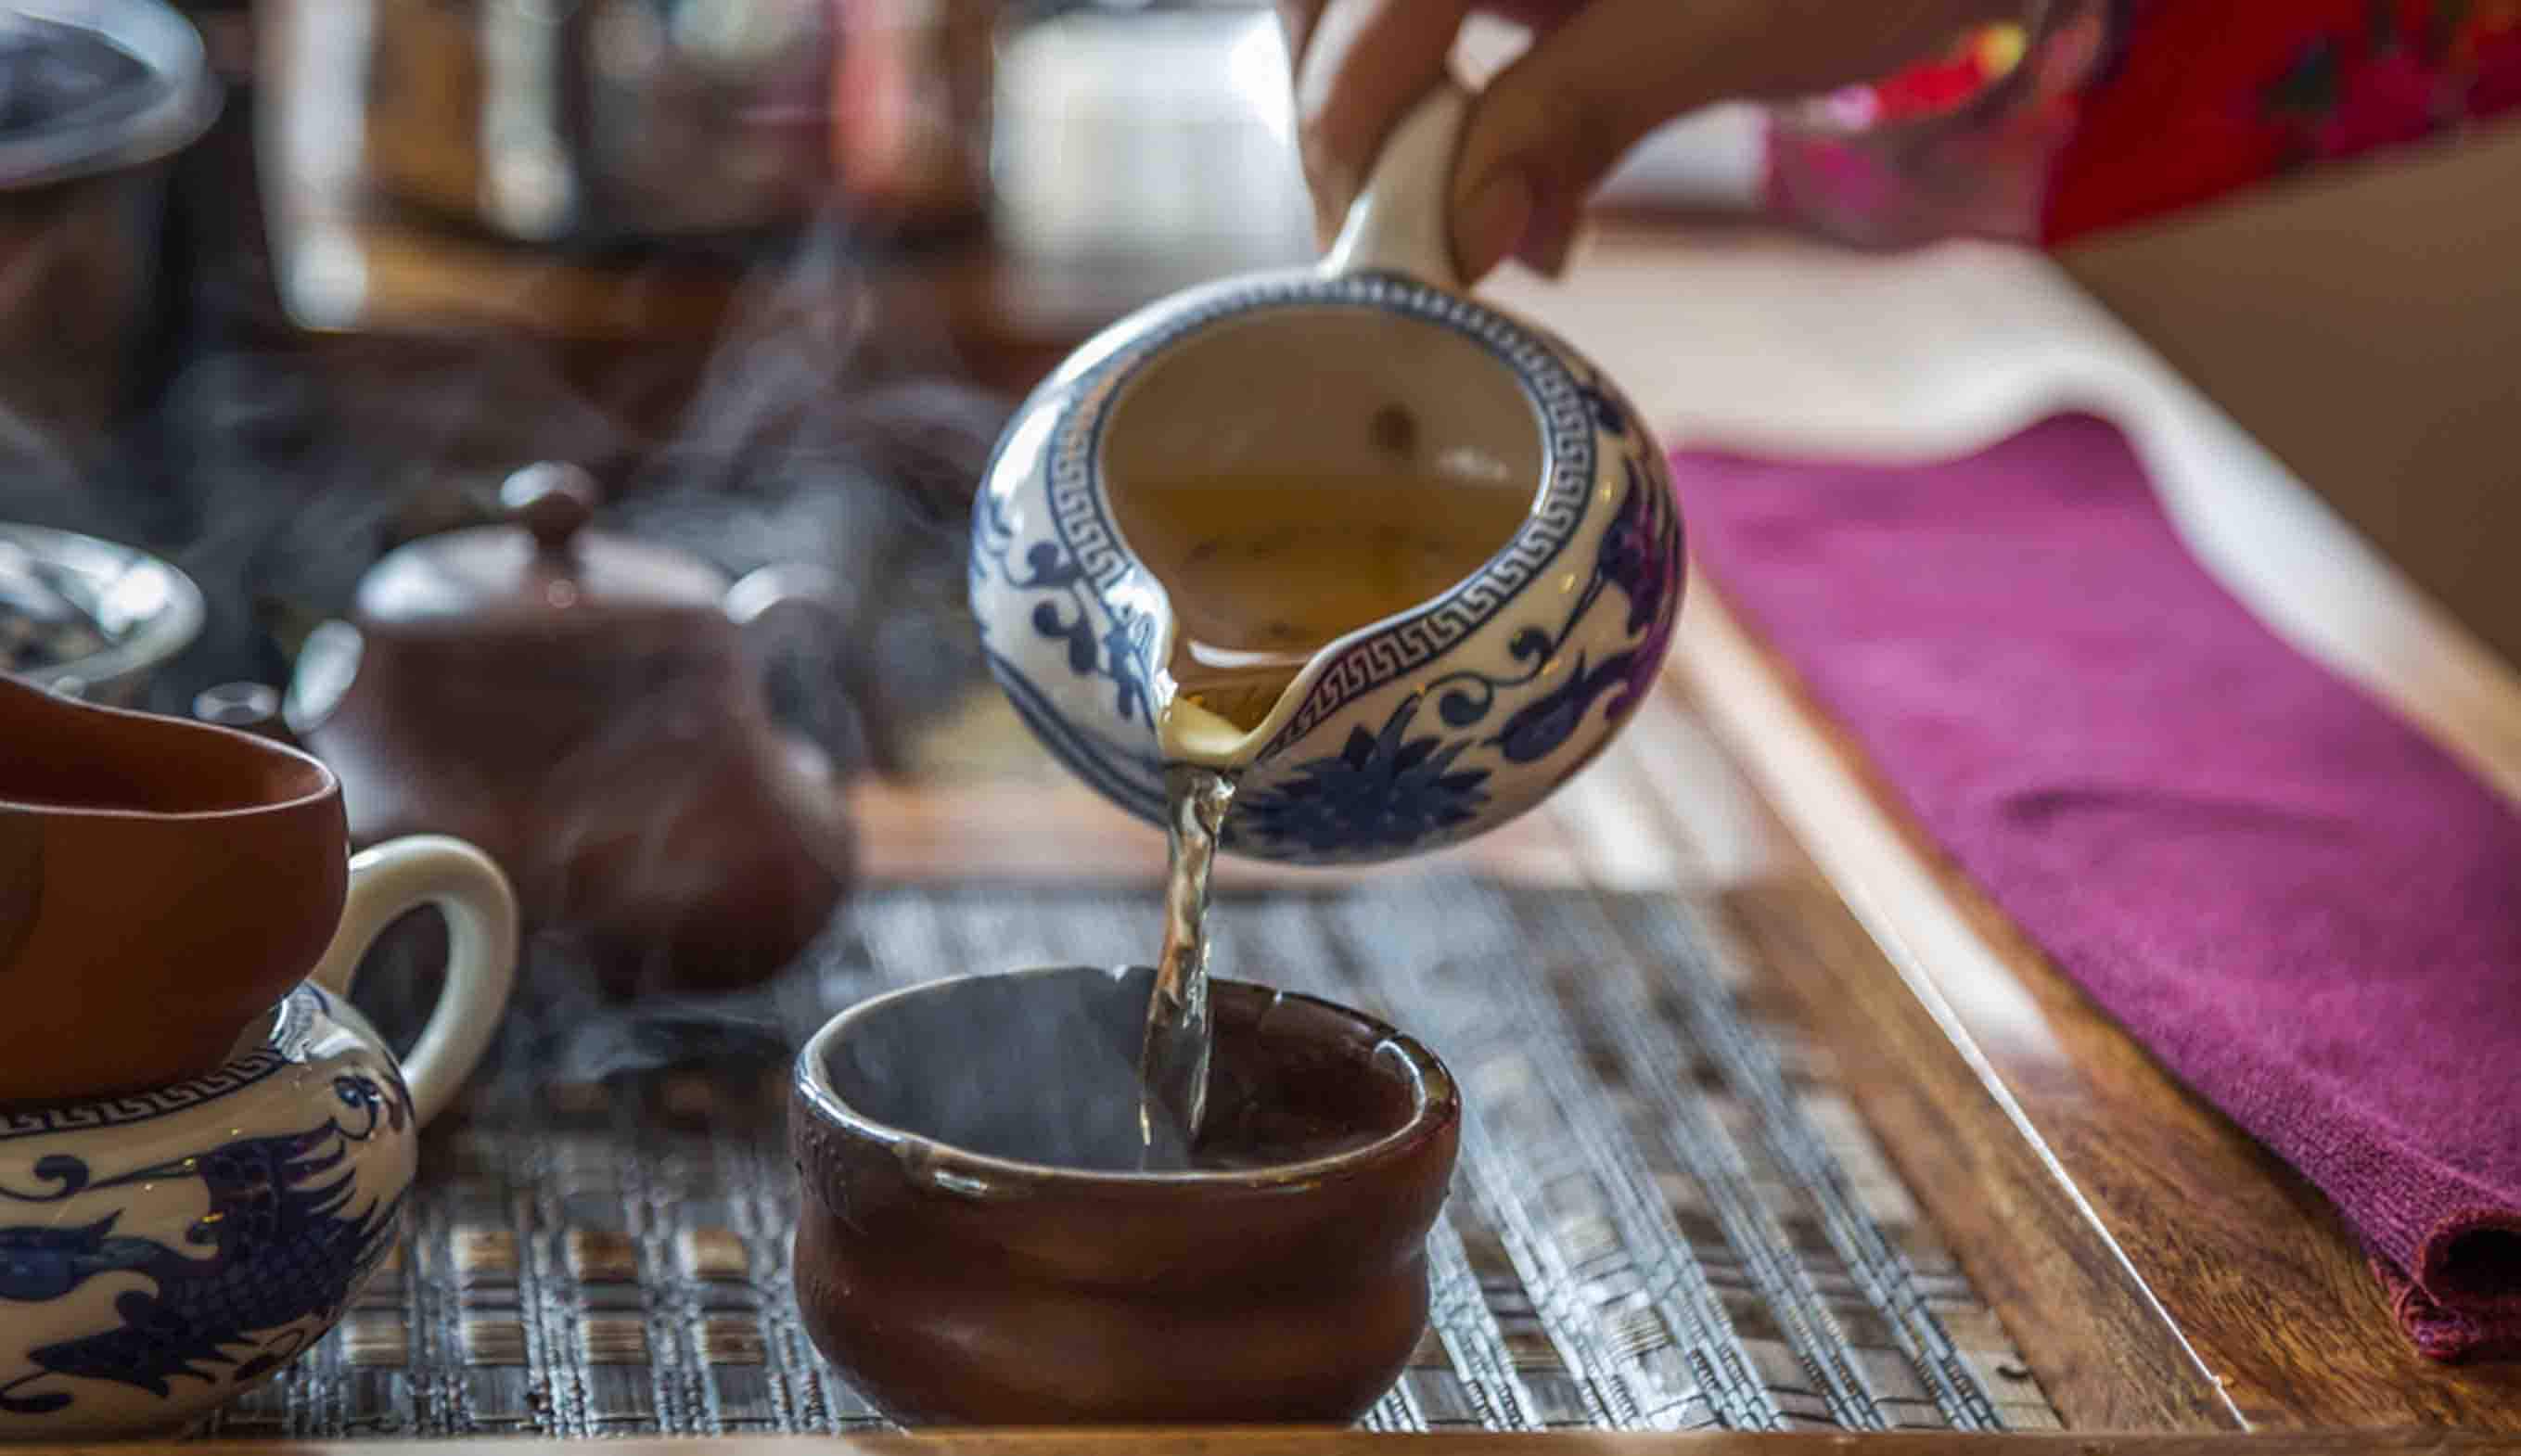 chinese tea